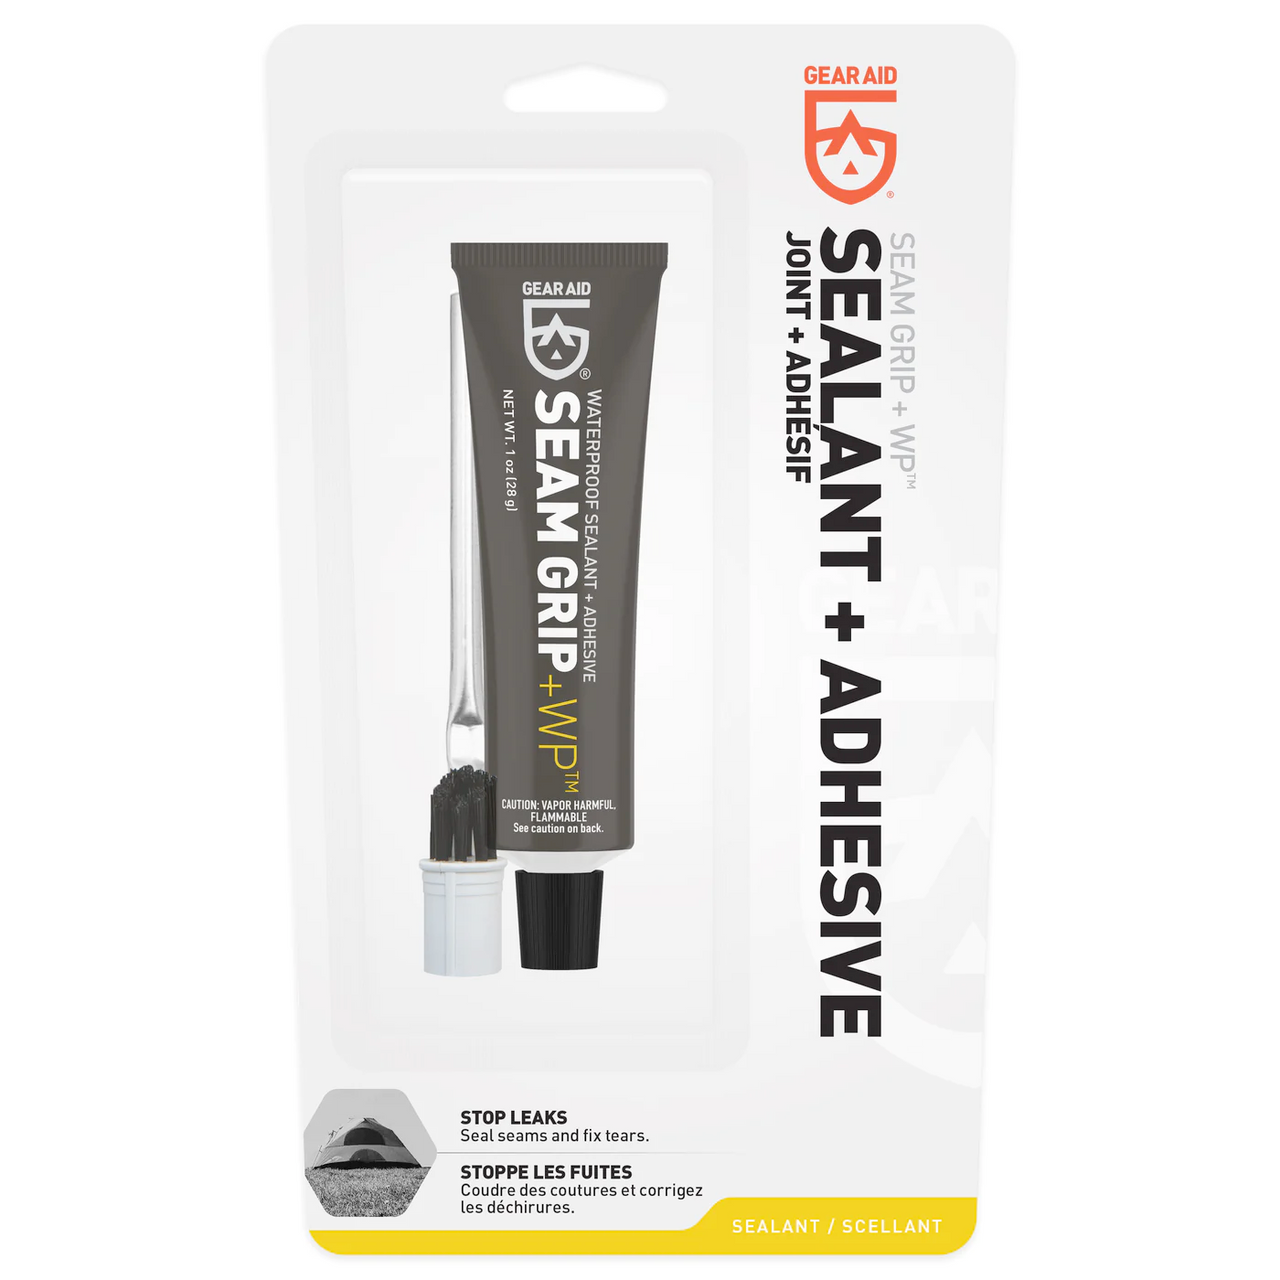 Gear Aid Seam Grip WP Waterproof Sealant & Adhesive, 1oz